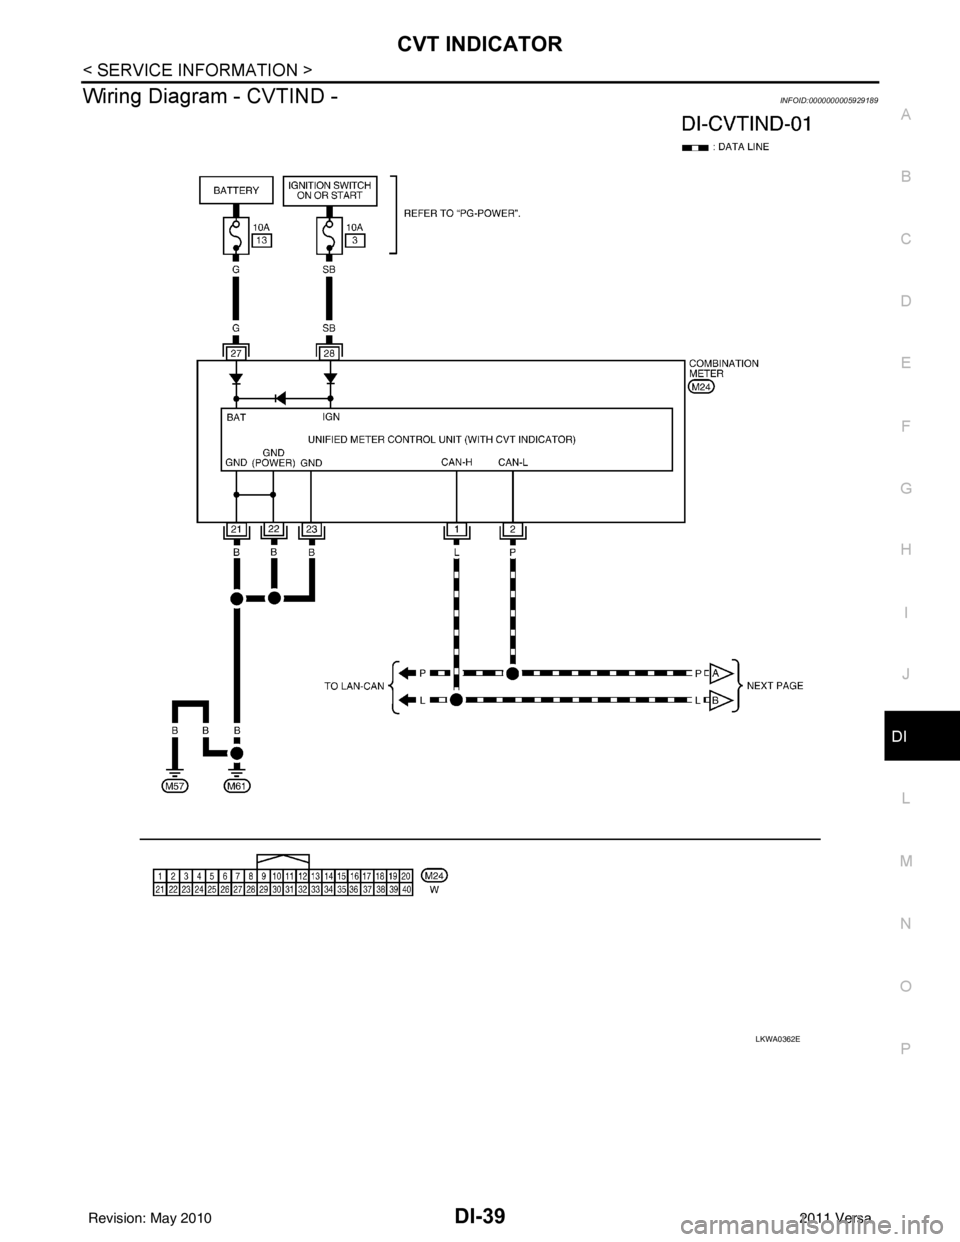 NISSAN LATIO 2011  Service Repair Manual CVT INDICATORDI-39
< SERVICE INFORMATION >
C
DE
F
G H
I
J
L
M A
B
DI
N
O P
Wiring Diagram - CVTIND -INFOID:0000000005929189
LKWA0362E
Revision: May 2010 2011 Versa 